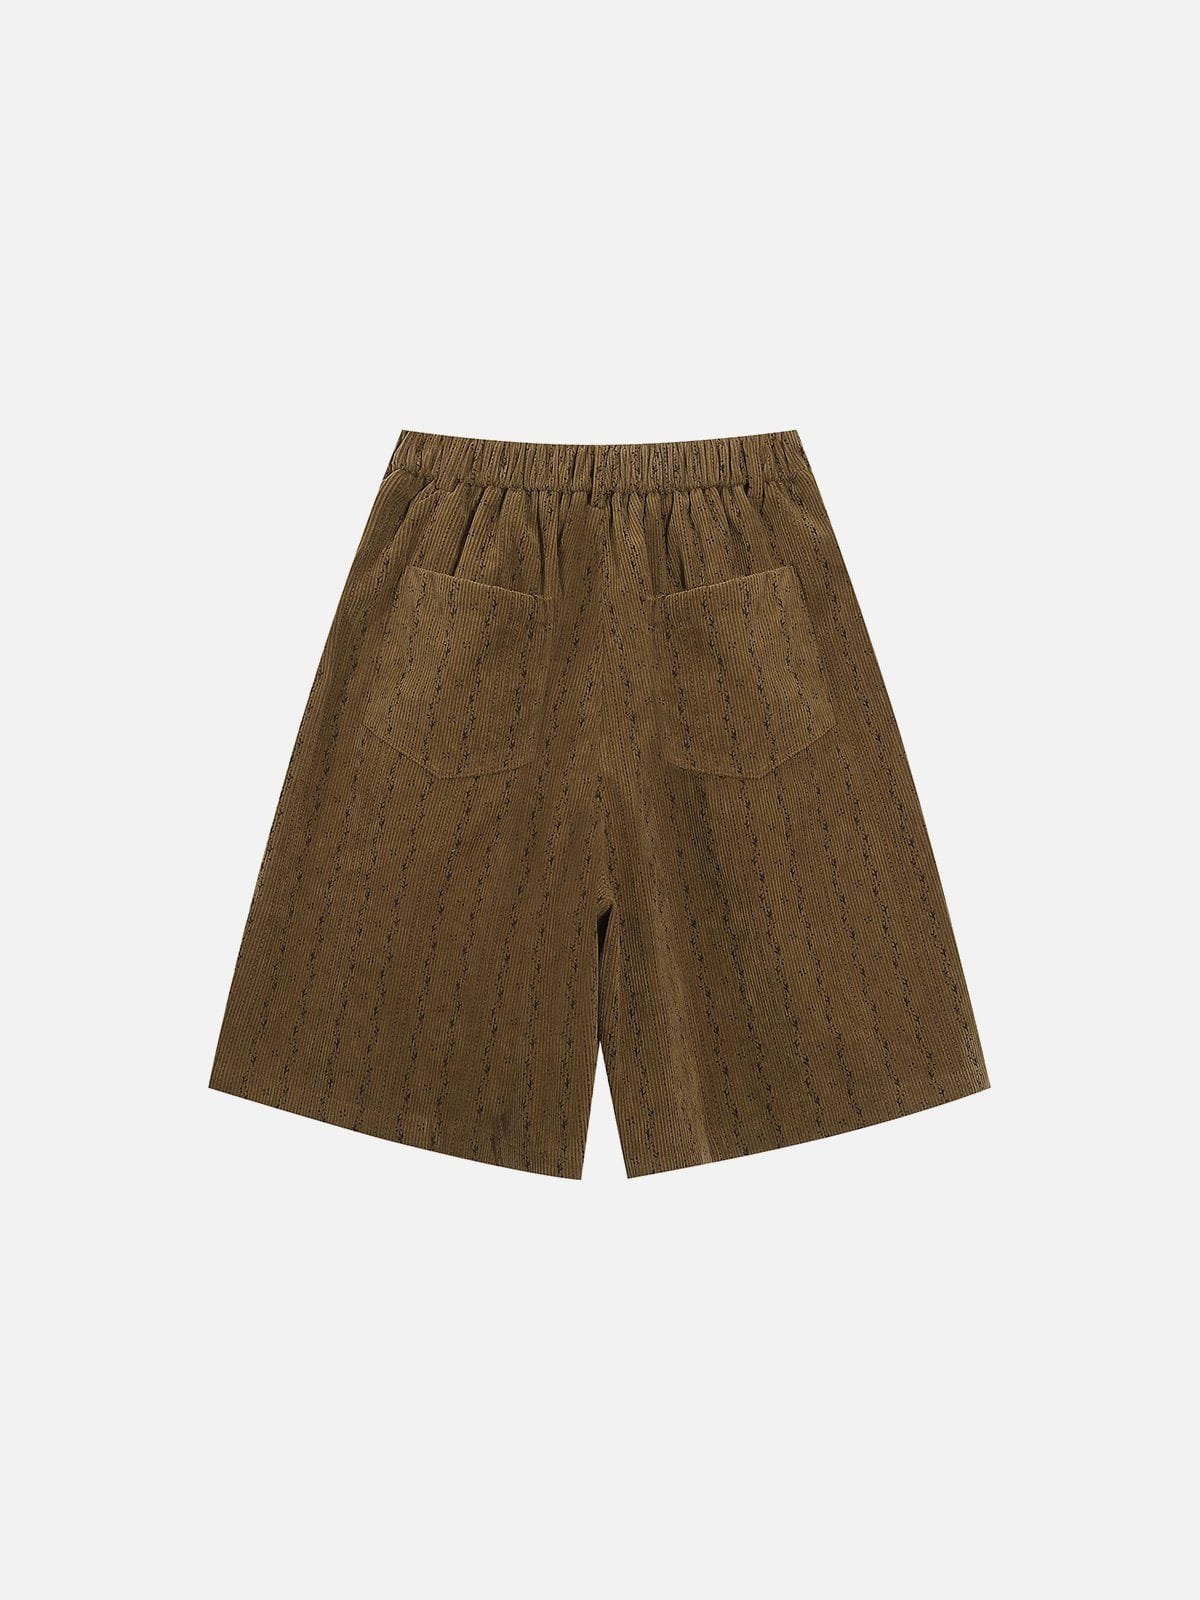 Aelfric Eden Wrinkle Corduroy Shorts